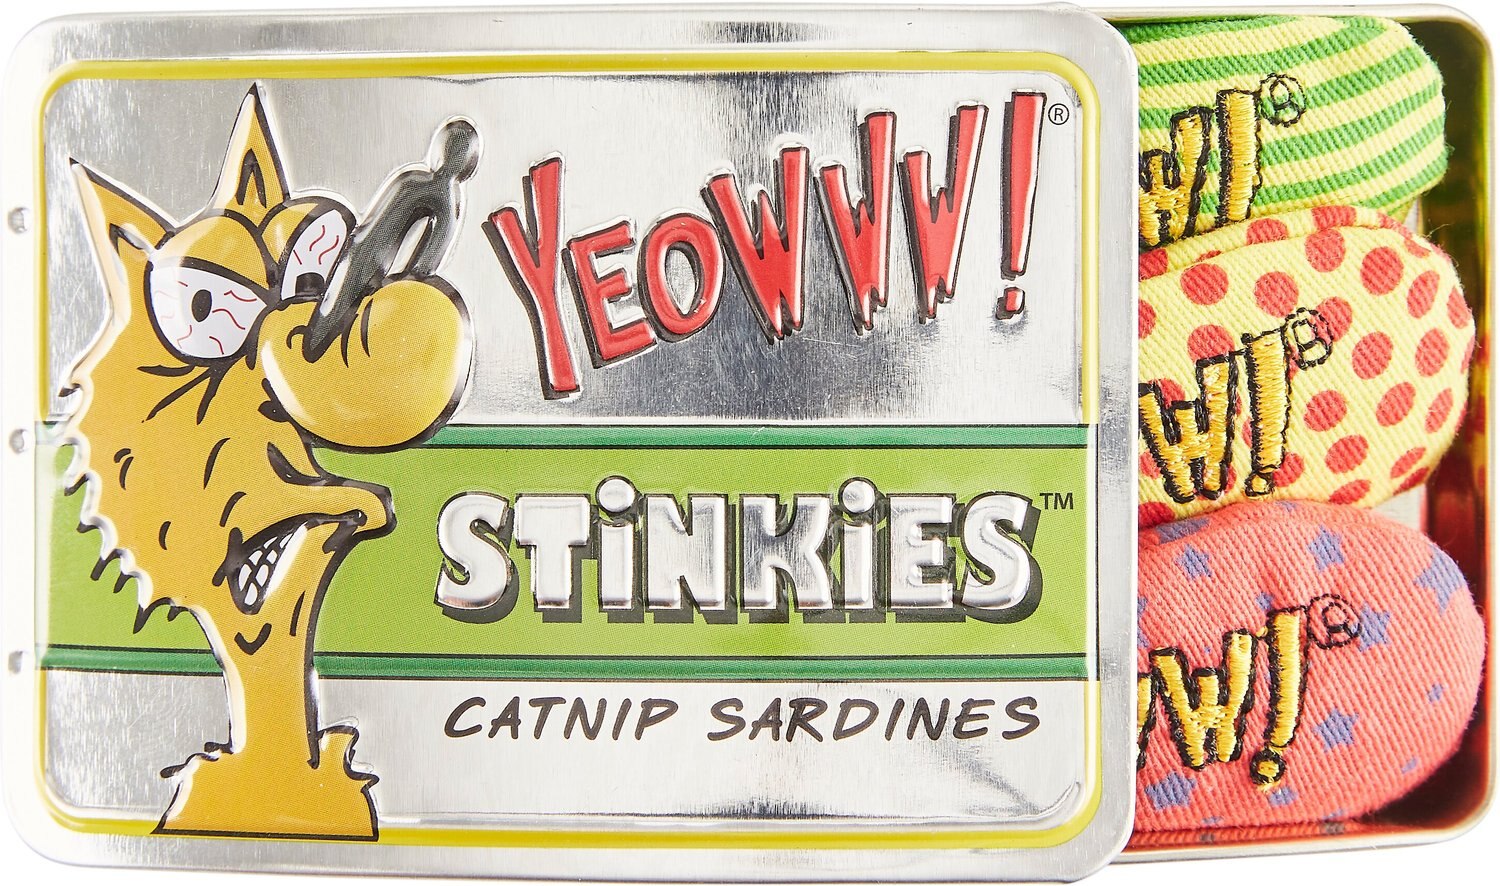 Stinkies 3" Organic Catnip Stuffed Sardine Fish Cat Toys Made in the USA Yeowww 